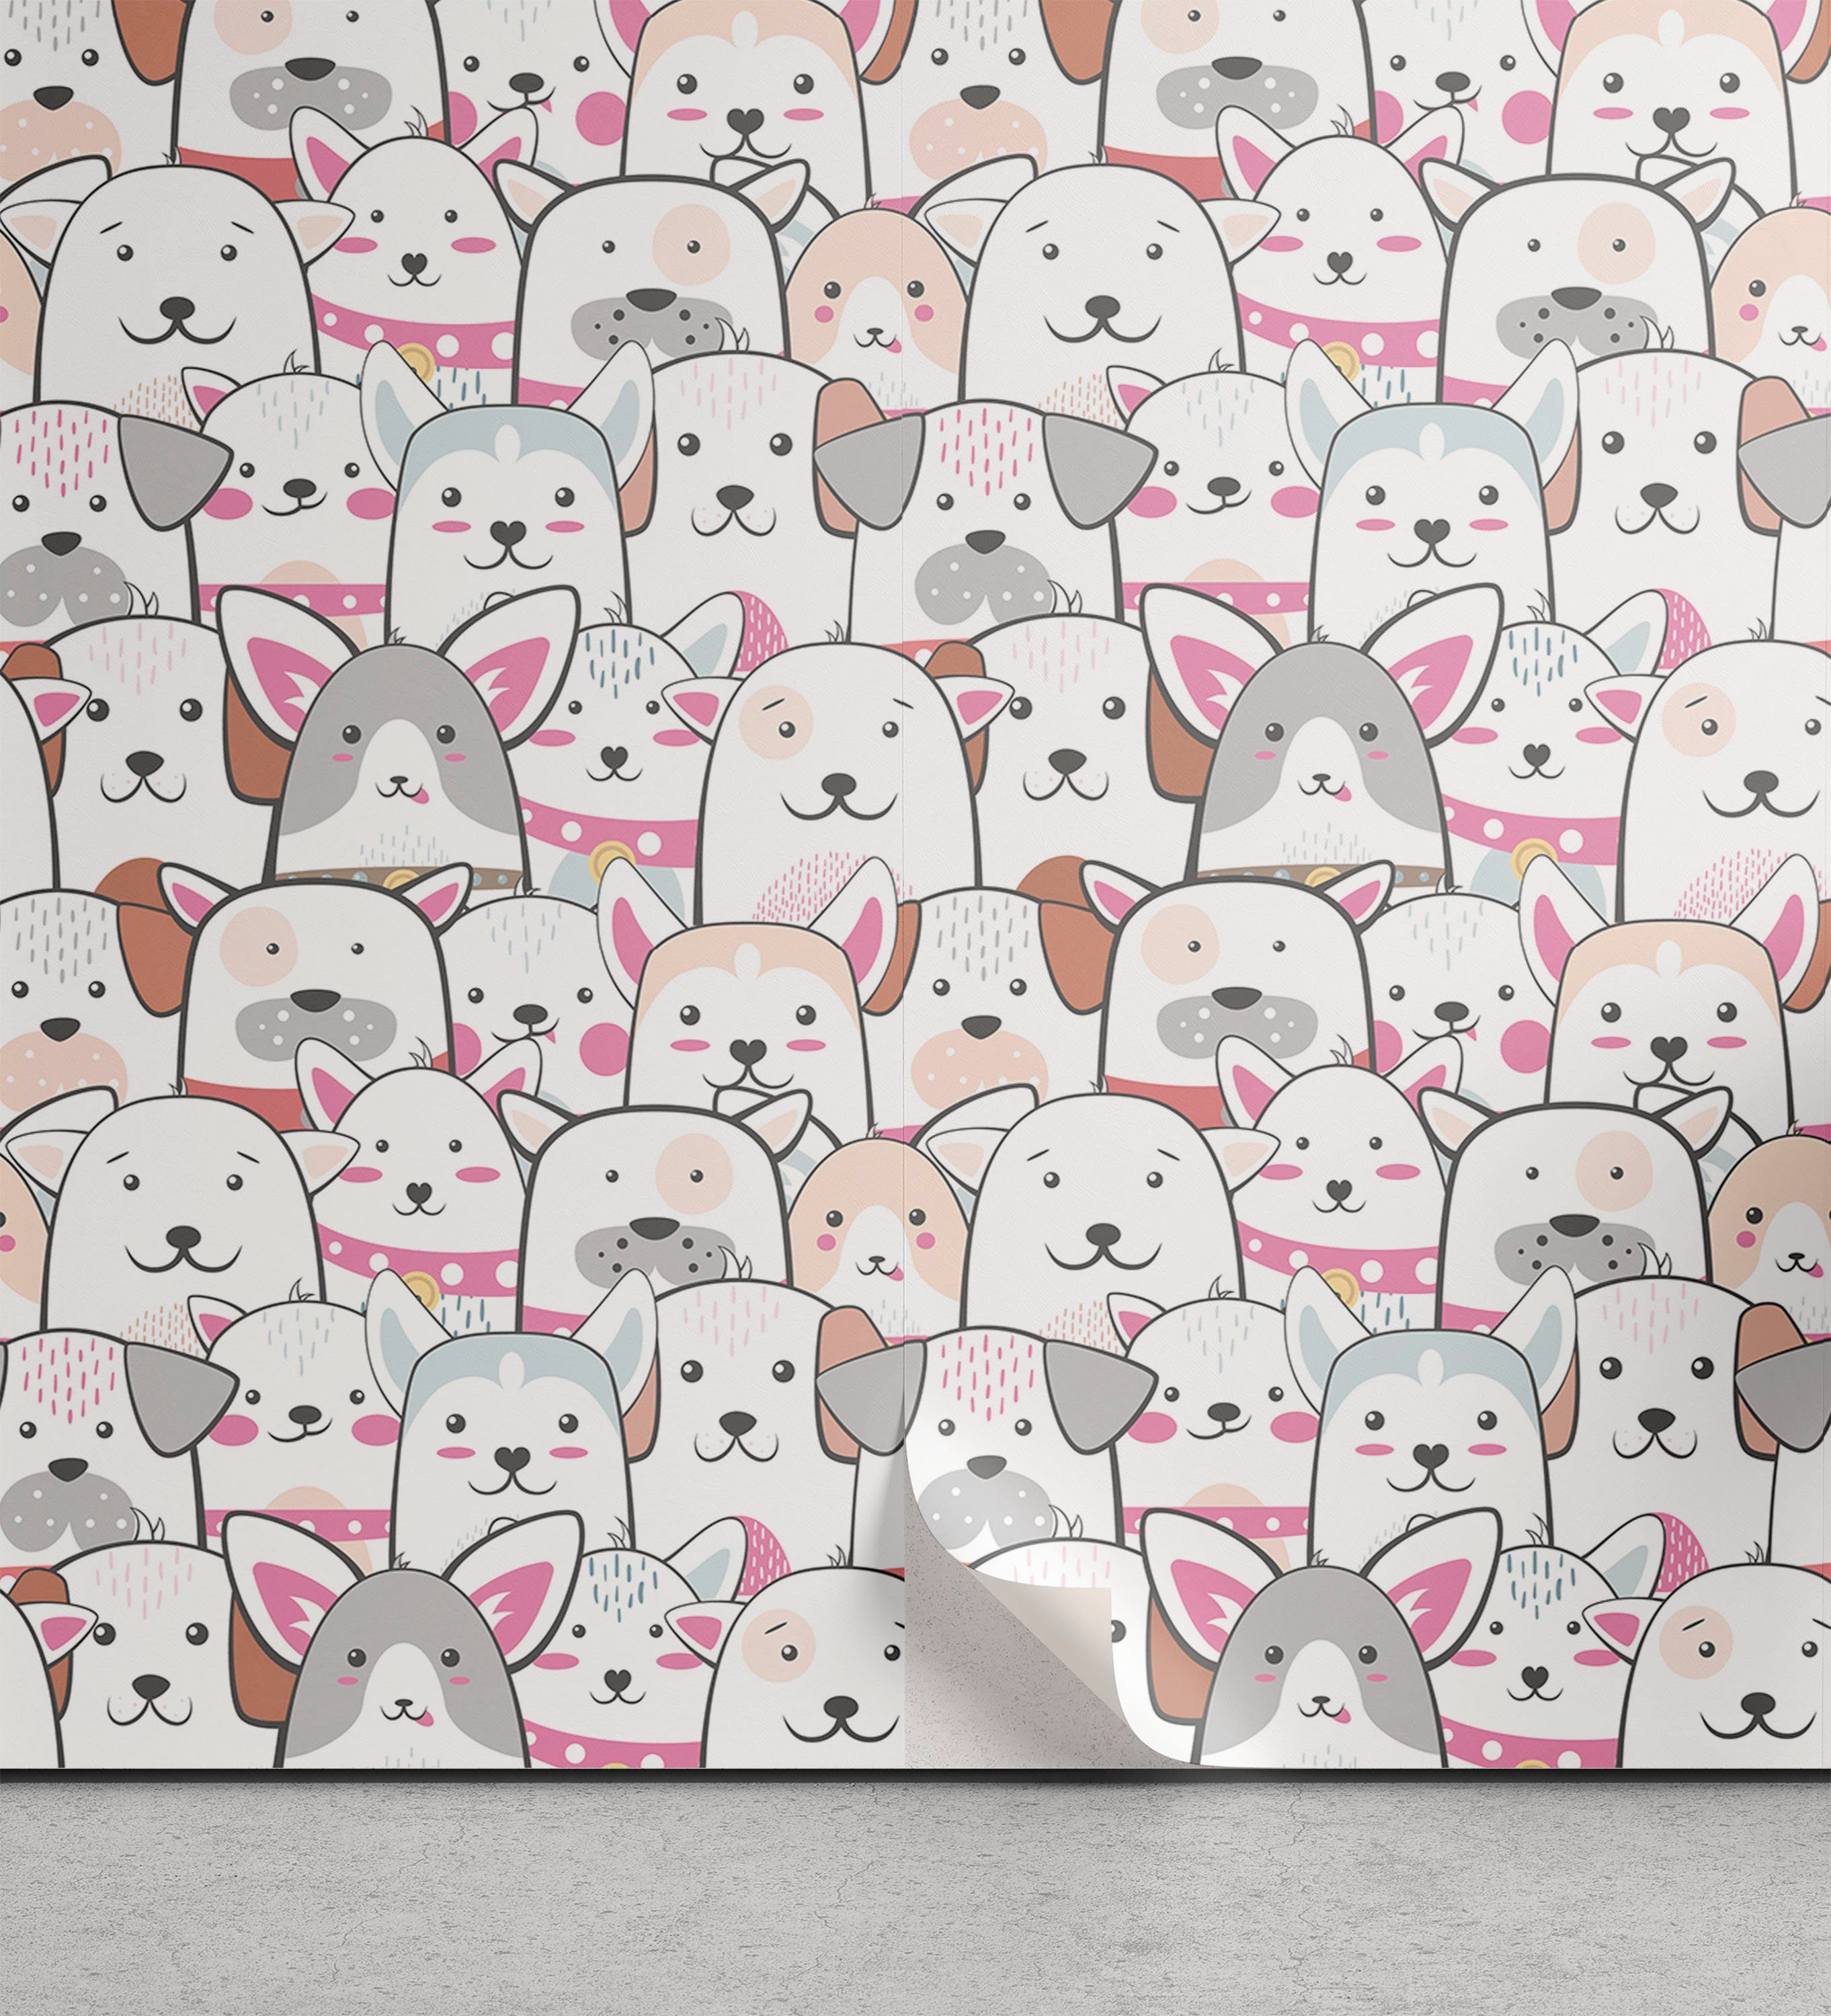 Abakuhaus Vinyltapete selbstklebendes Wohnzimmer Küchenakzent, Hunde Netter freundlicher Funny Animals